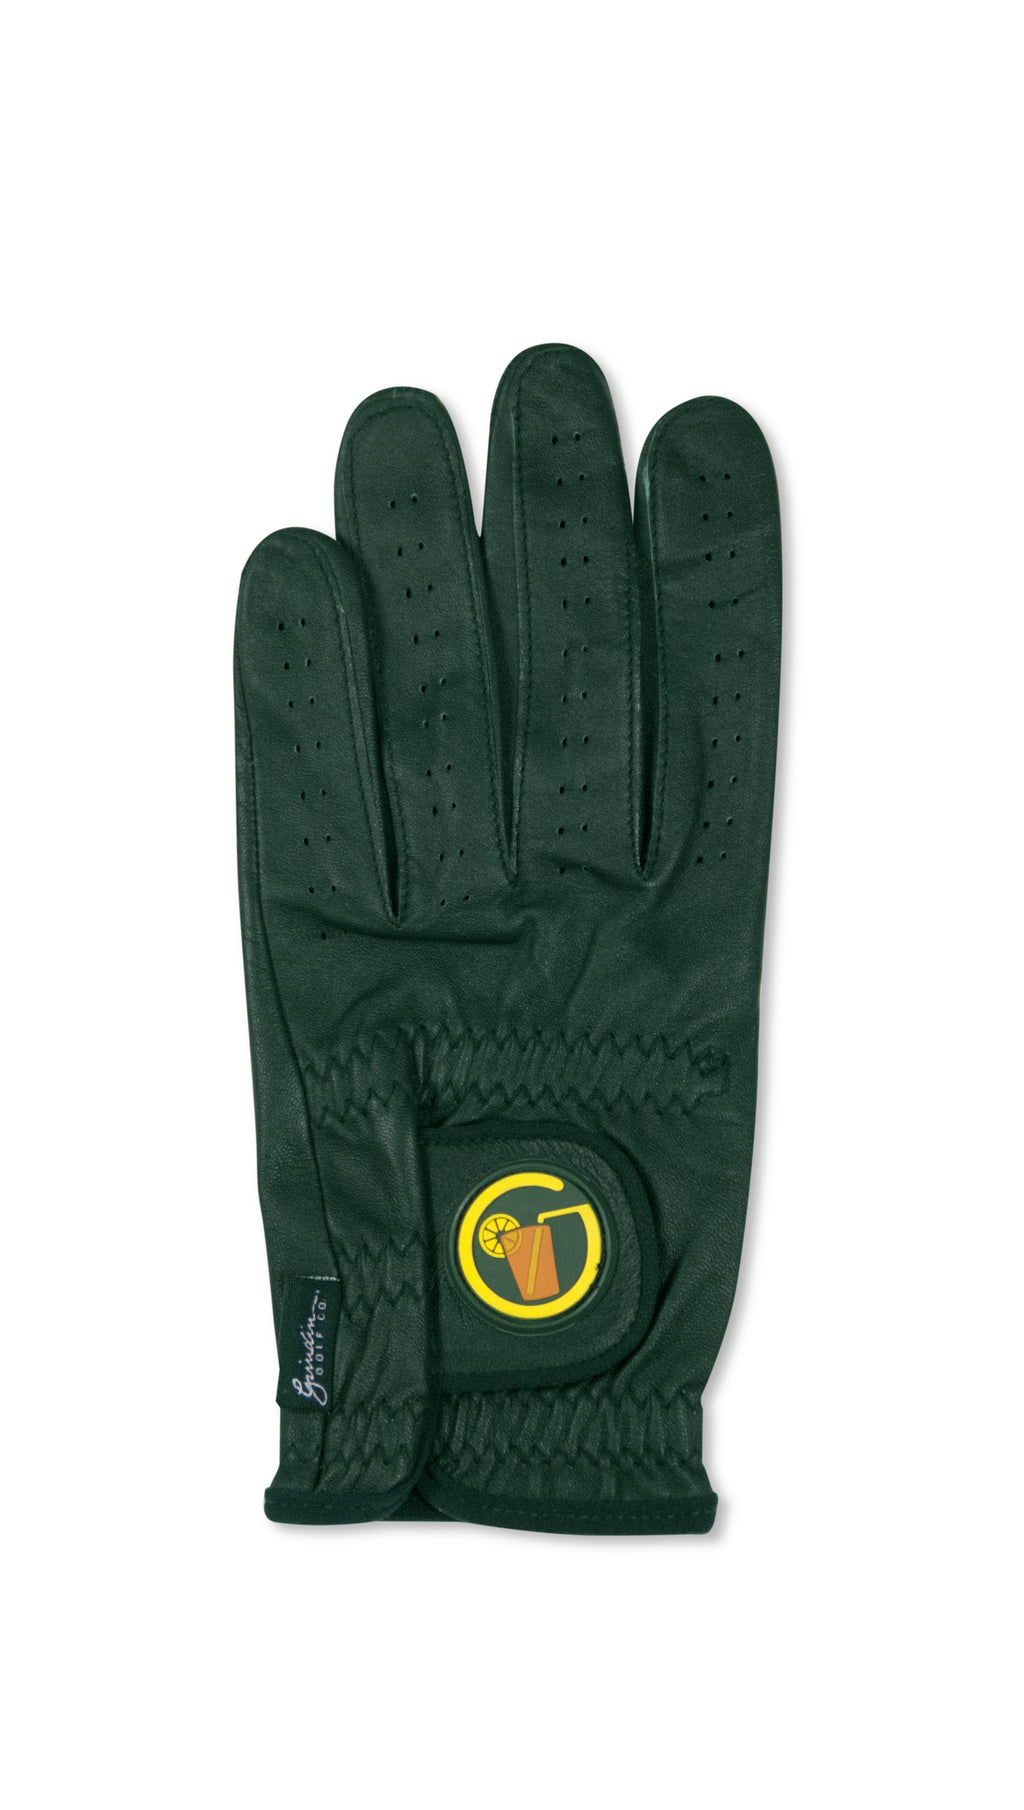 Circle "SWEET" Tea Logo - Green  Cabretta Leather Golf Glove